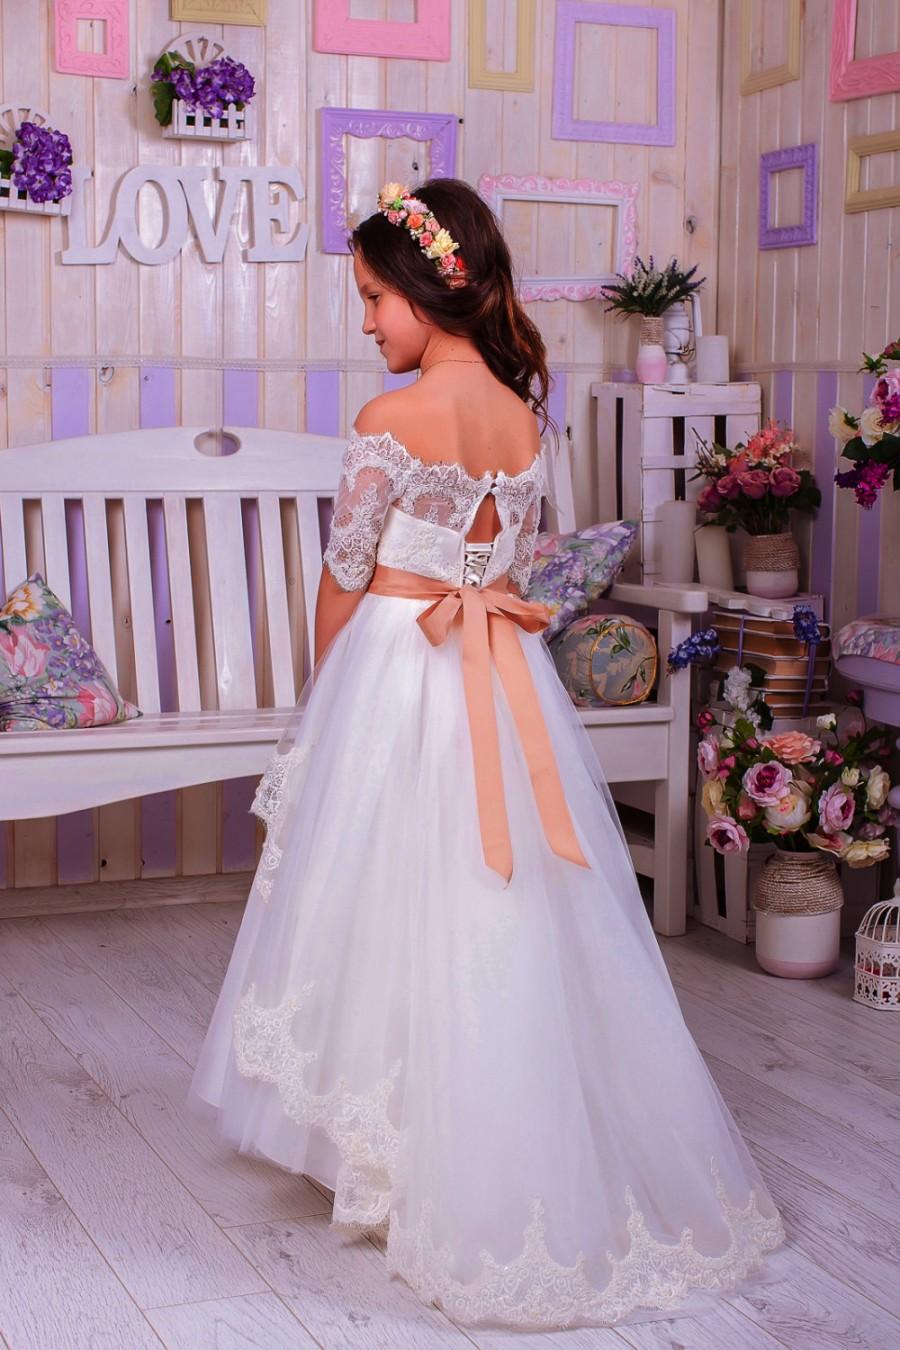 Wedding - Ivory Lace Flower Girl Dress,Flower Girl Dress,Wedding Party Dress,Baby Dress, Rustic Girl Dress,White Girls Dresses,Ivory Flower Girl Dress